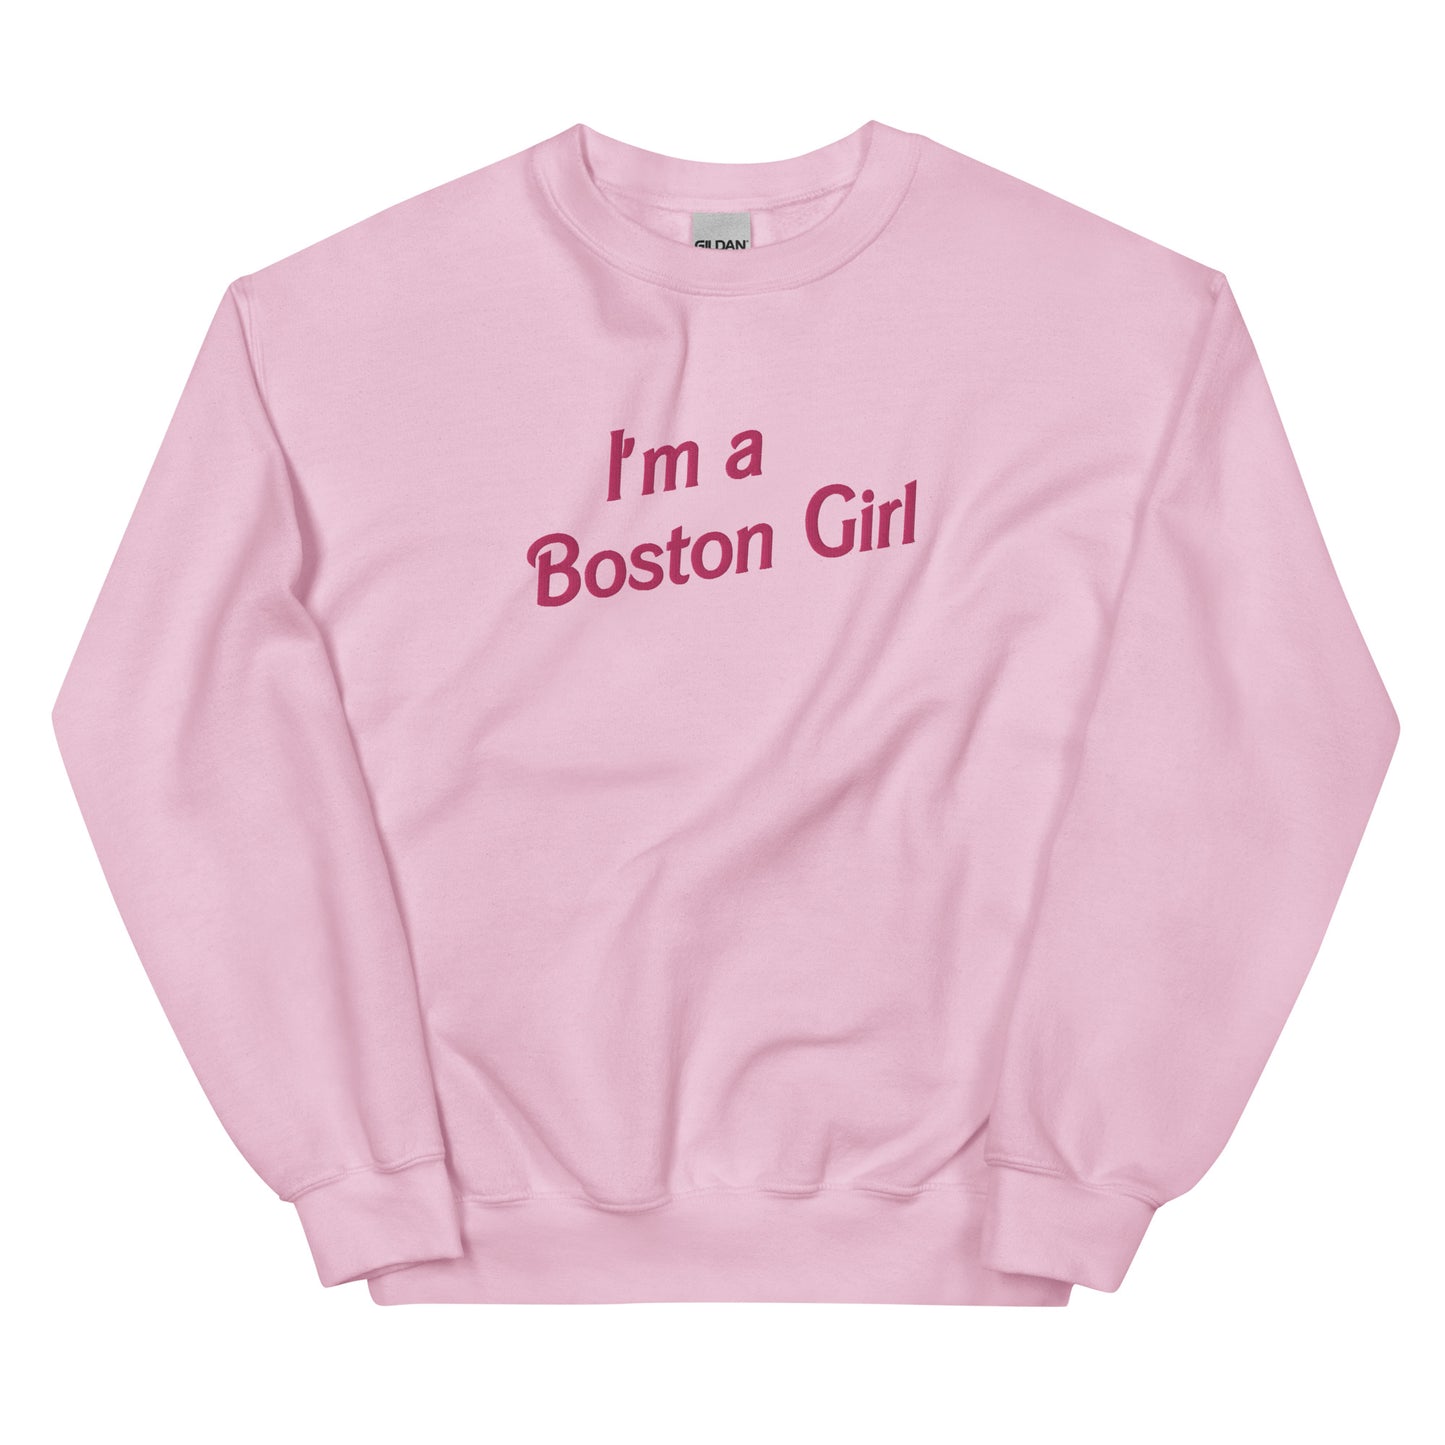 I'm a Boston Girl Embroidered Crewneck